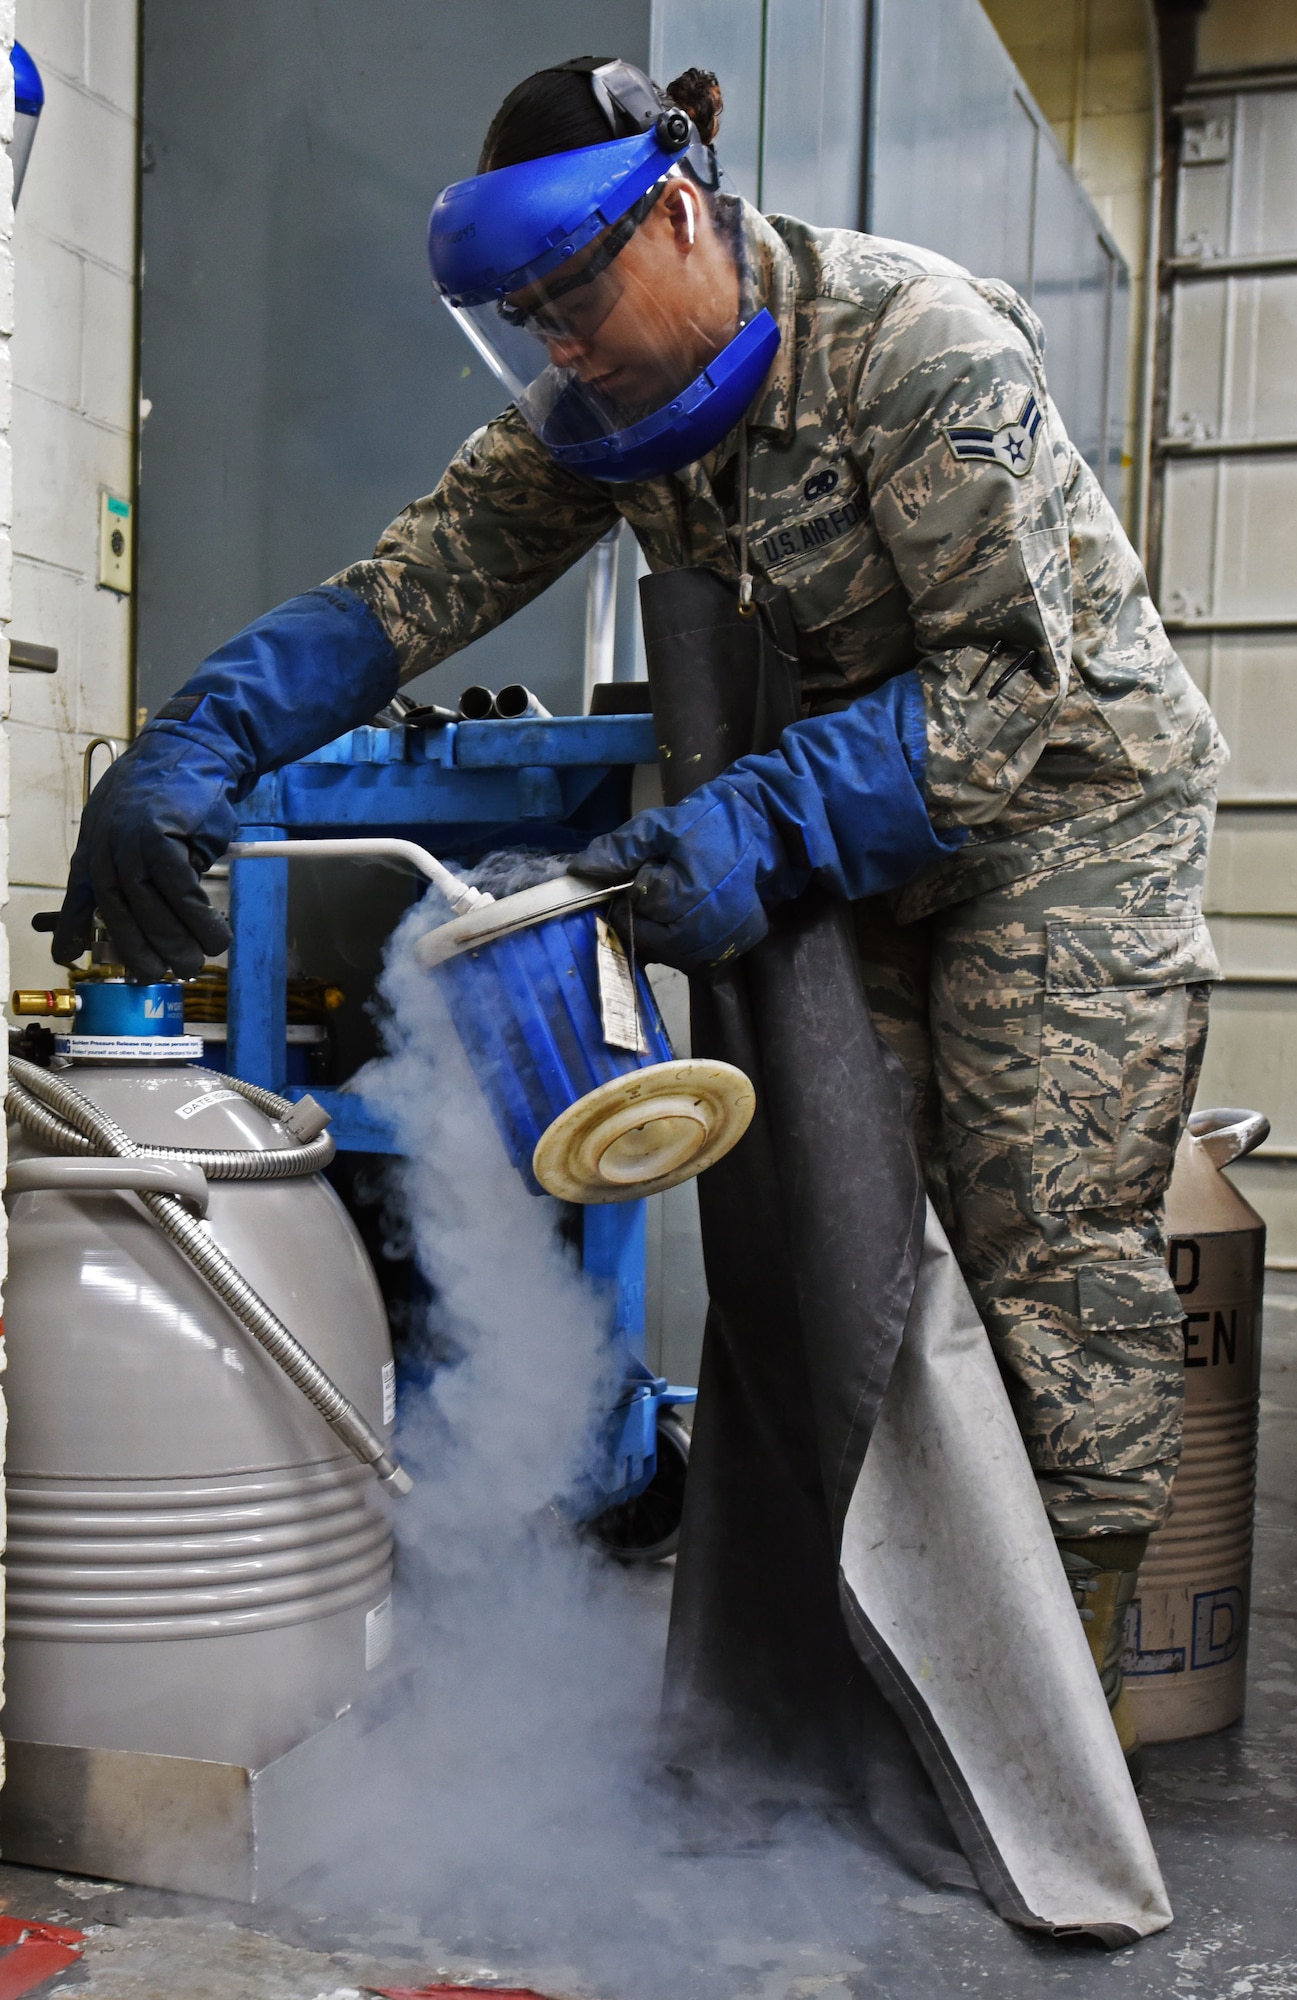 U.S. Air Force Airman 1st Class Sondra Saul, 20th Equipment Maintenance Squadron aircraft metals technician apprentice, fills a bucket with liquid nitrogen in the metal shop at Shaw Air Force Base, S.C., Nov. 30, 2018.